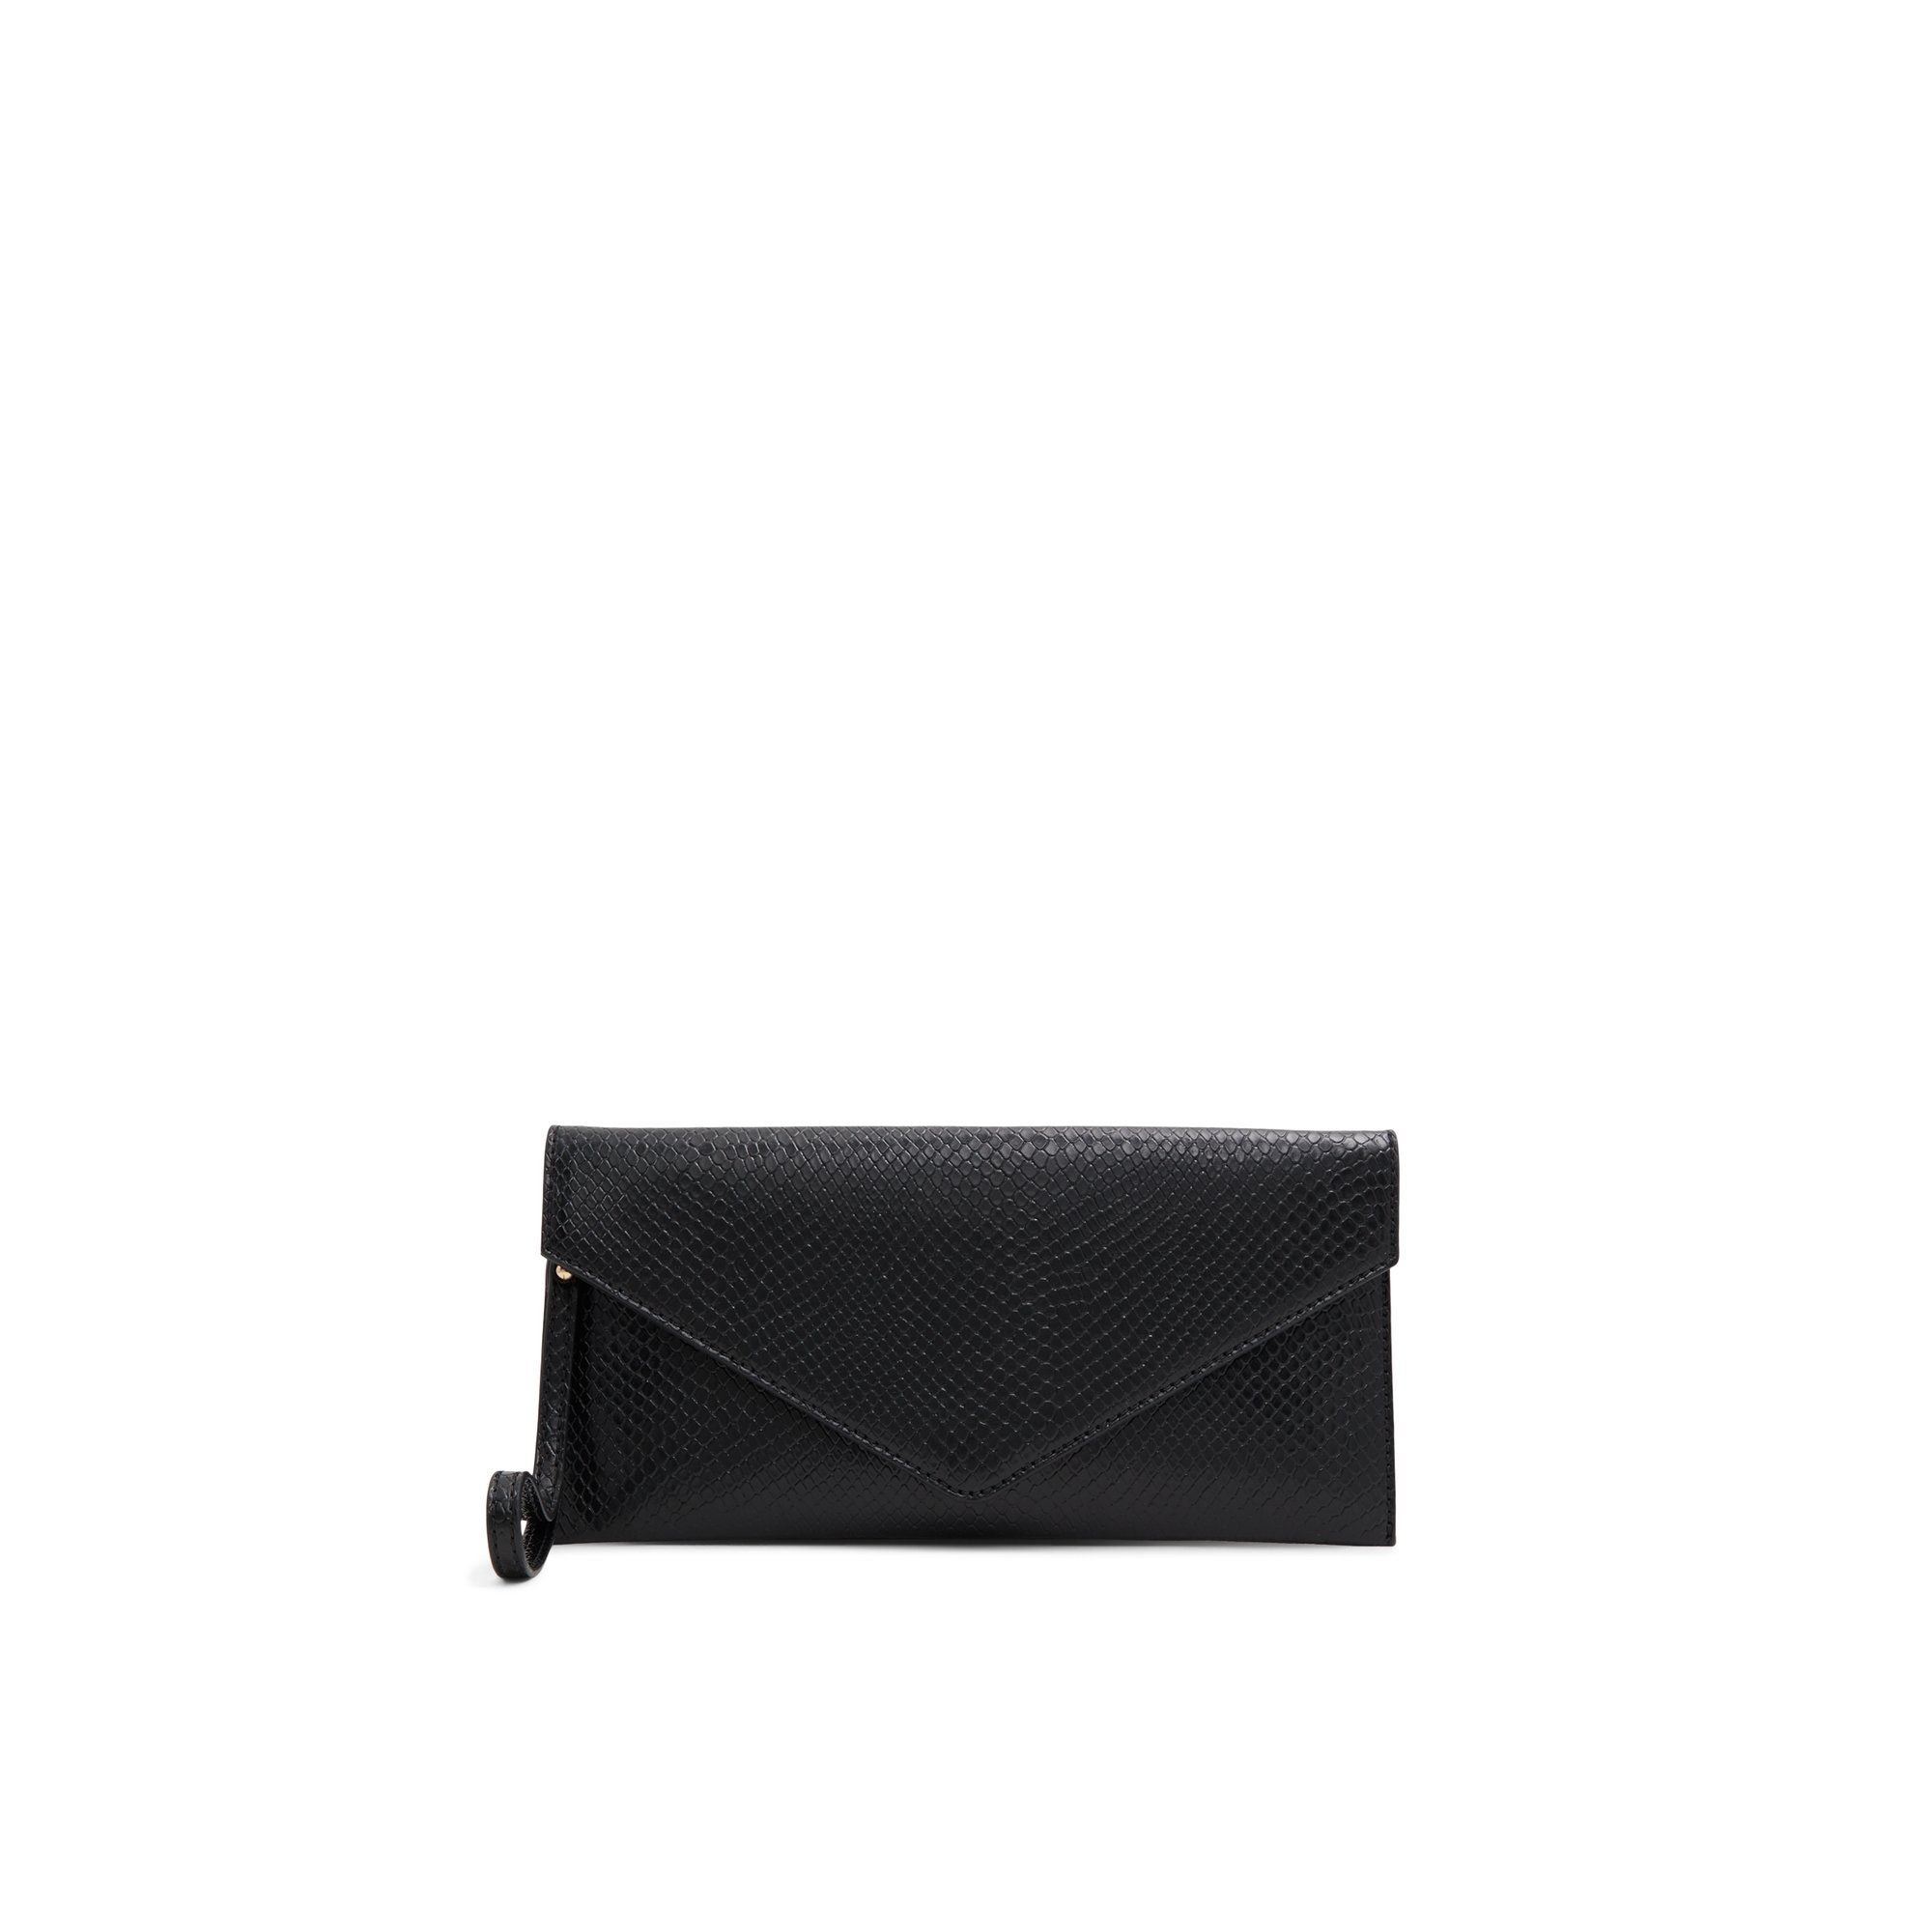 ALDO Mallasveex - Women's Handbags Clutches & Evening Bags